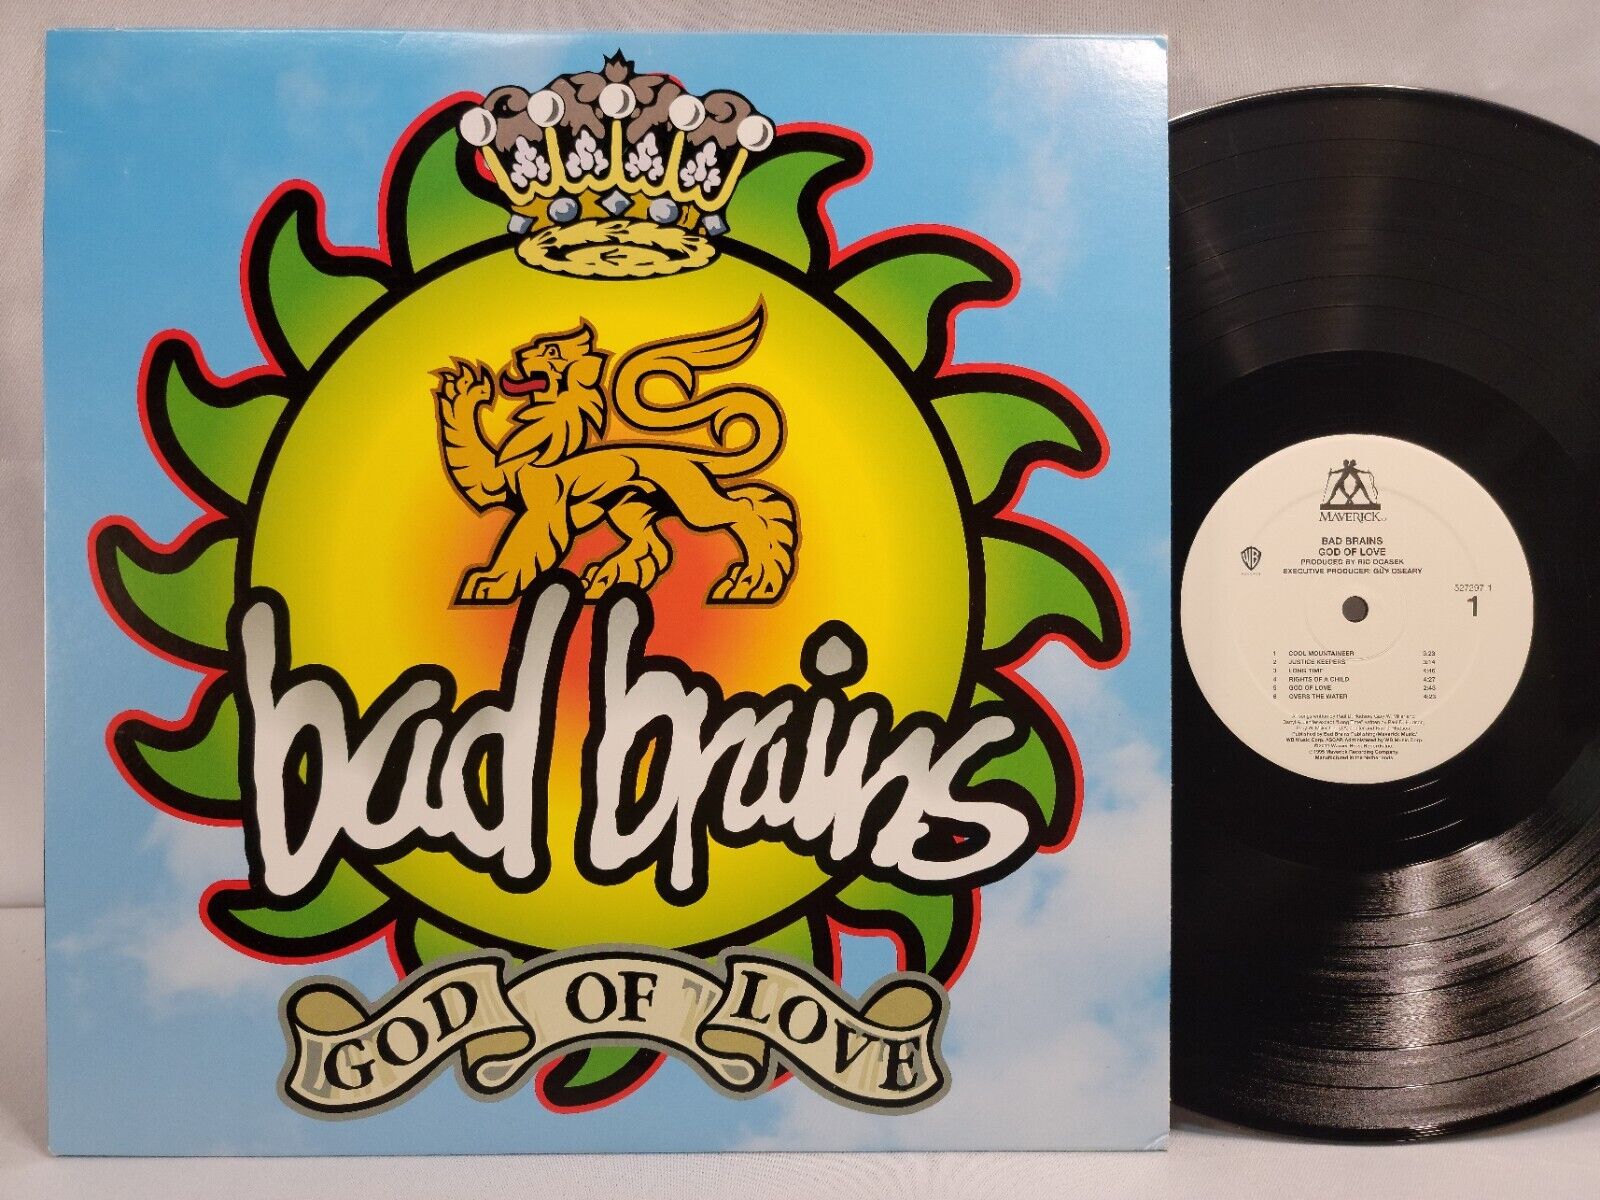 Bad Brains - God Of Love - 2011 Limited Edition LP - MAVERICK - HARDCORE - VG++